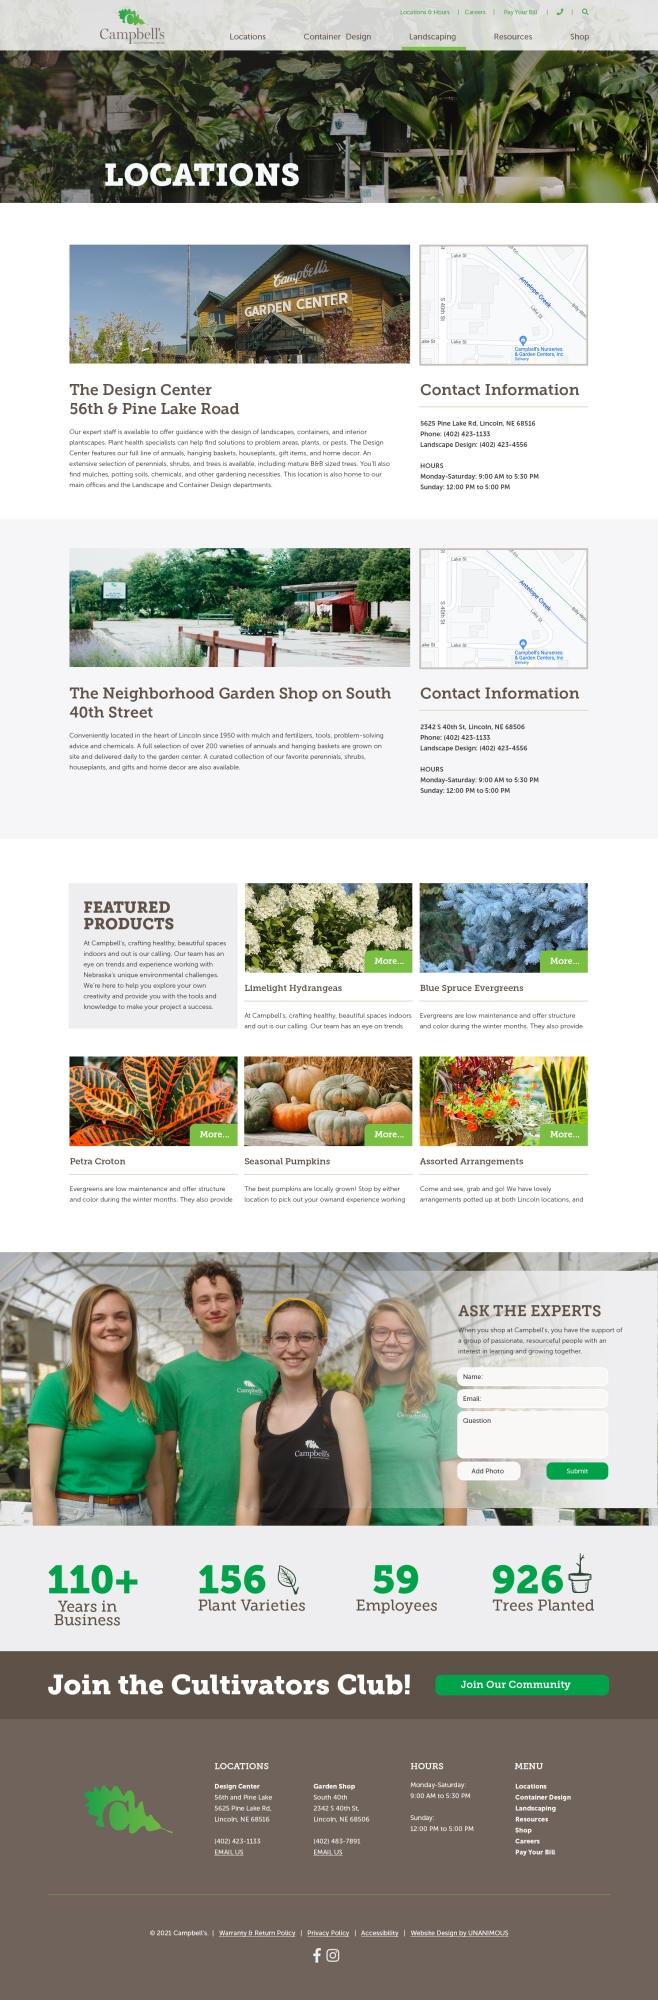 campbells landscaping website locations